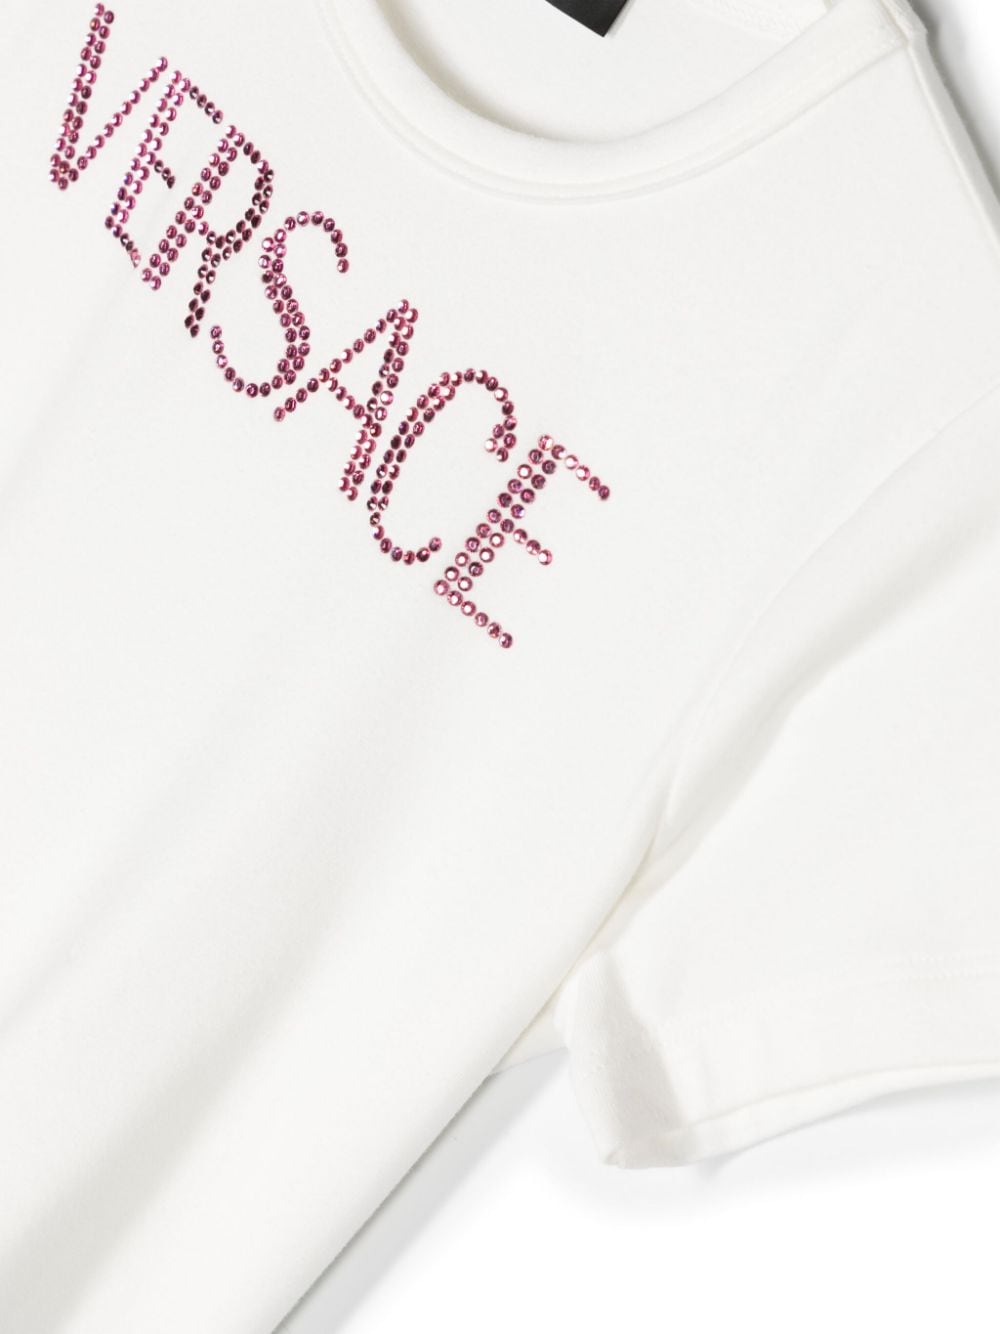 Versace Kids t-shirt con logo